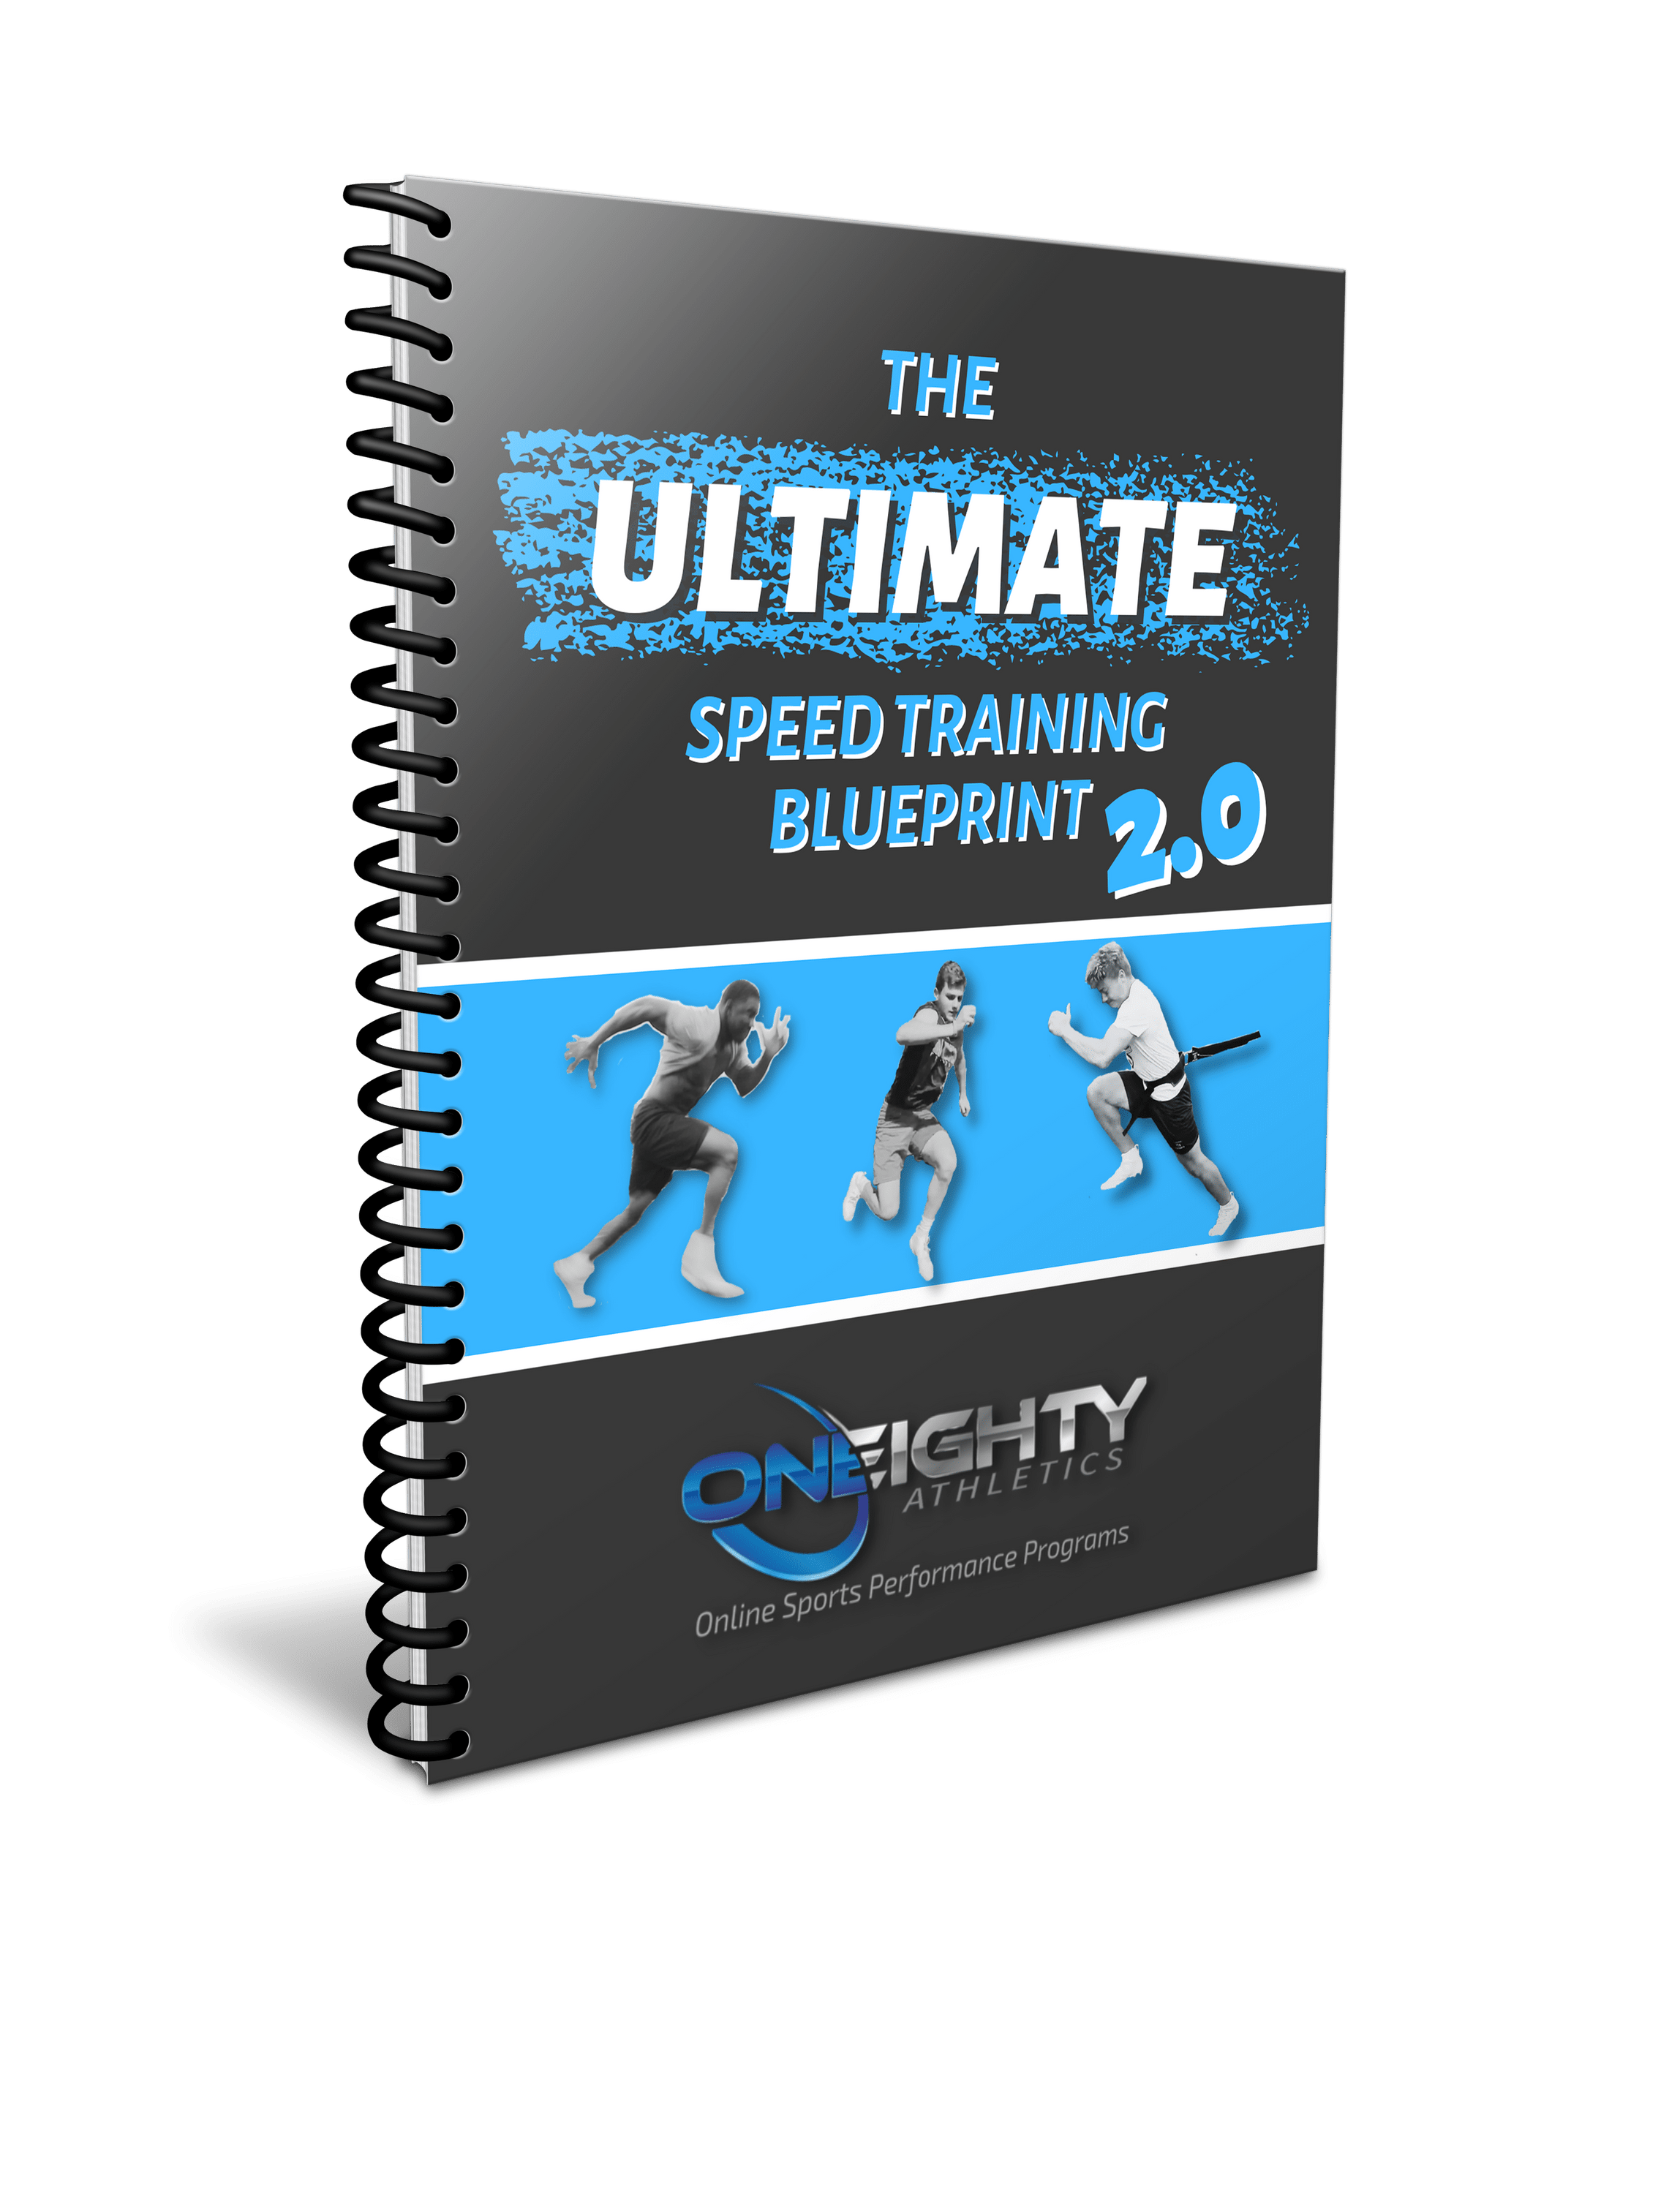 The Ultimate Speed Training Blueprint 2.0